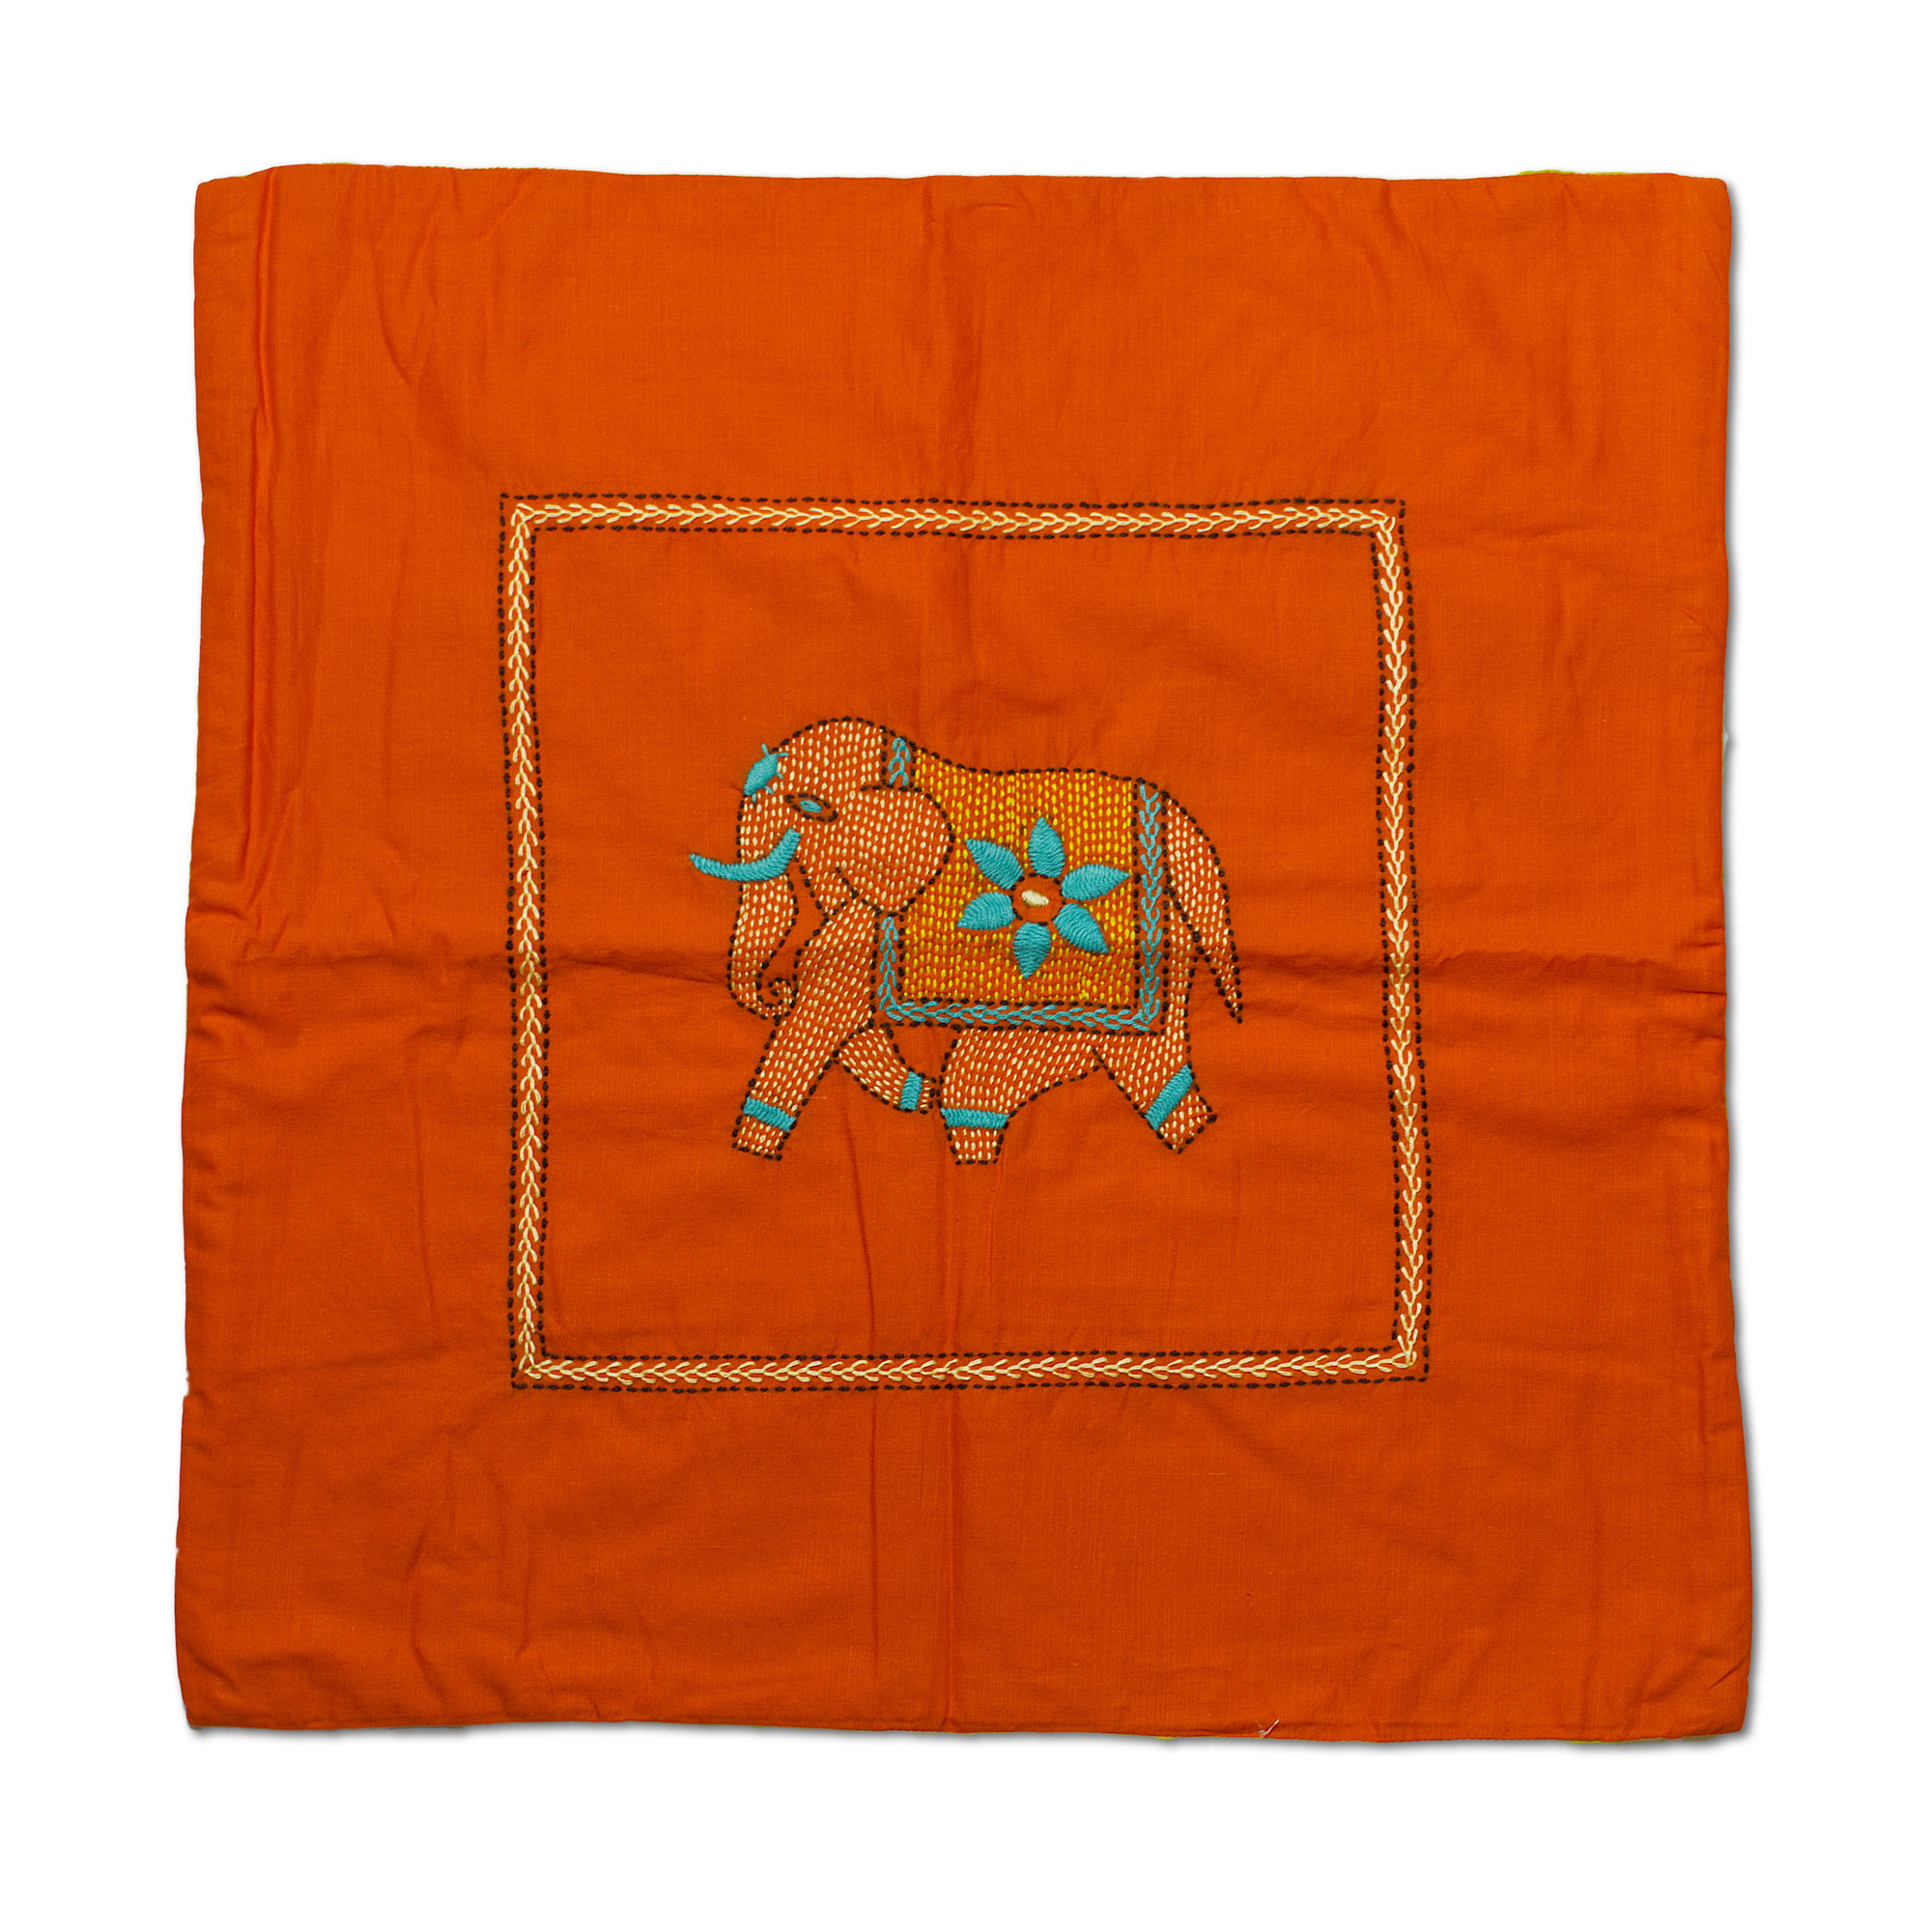 Cushion Cover - Dinajpur (elephant) In Asif (orange)